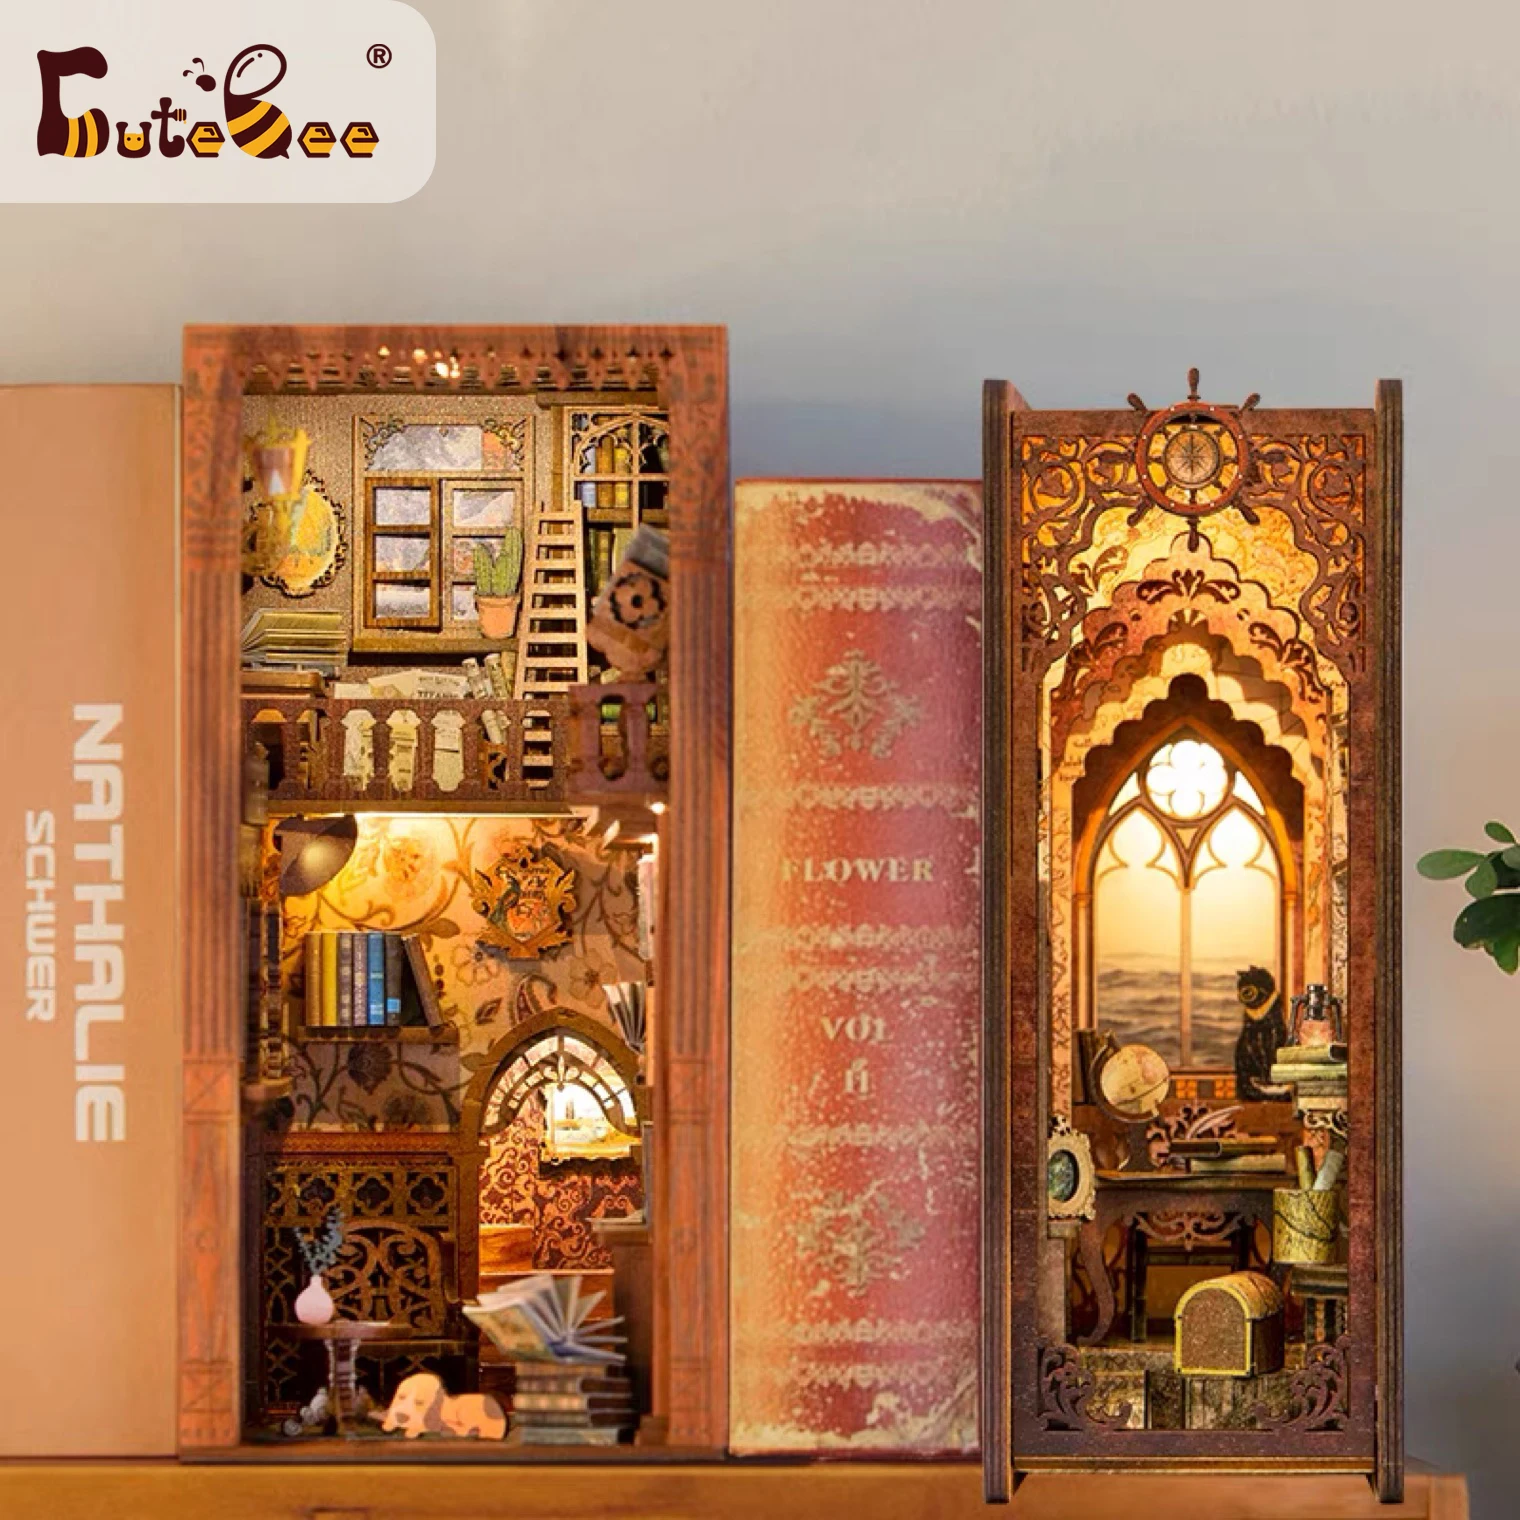 קנו אלי אקספרס  CUTEBEE DIY Book Nook Kit Miniature Dollhouse Eternal  Bookstore Bookend Wooden Book Shelf Insert Lighting Model Toy For Kid Gift